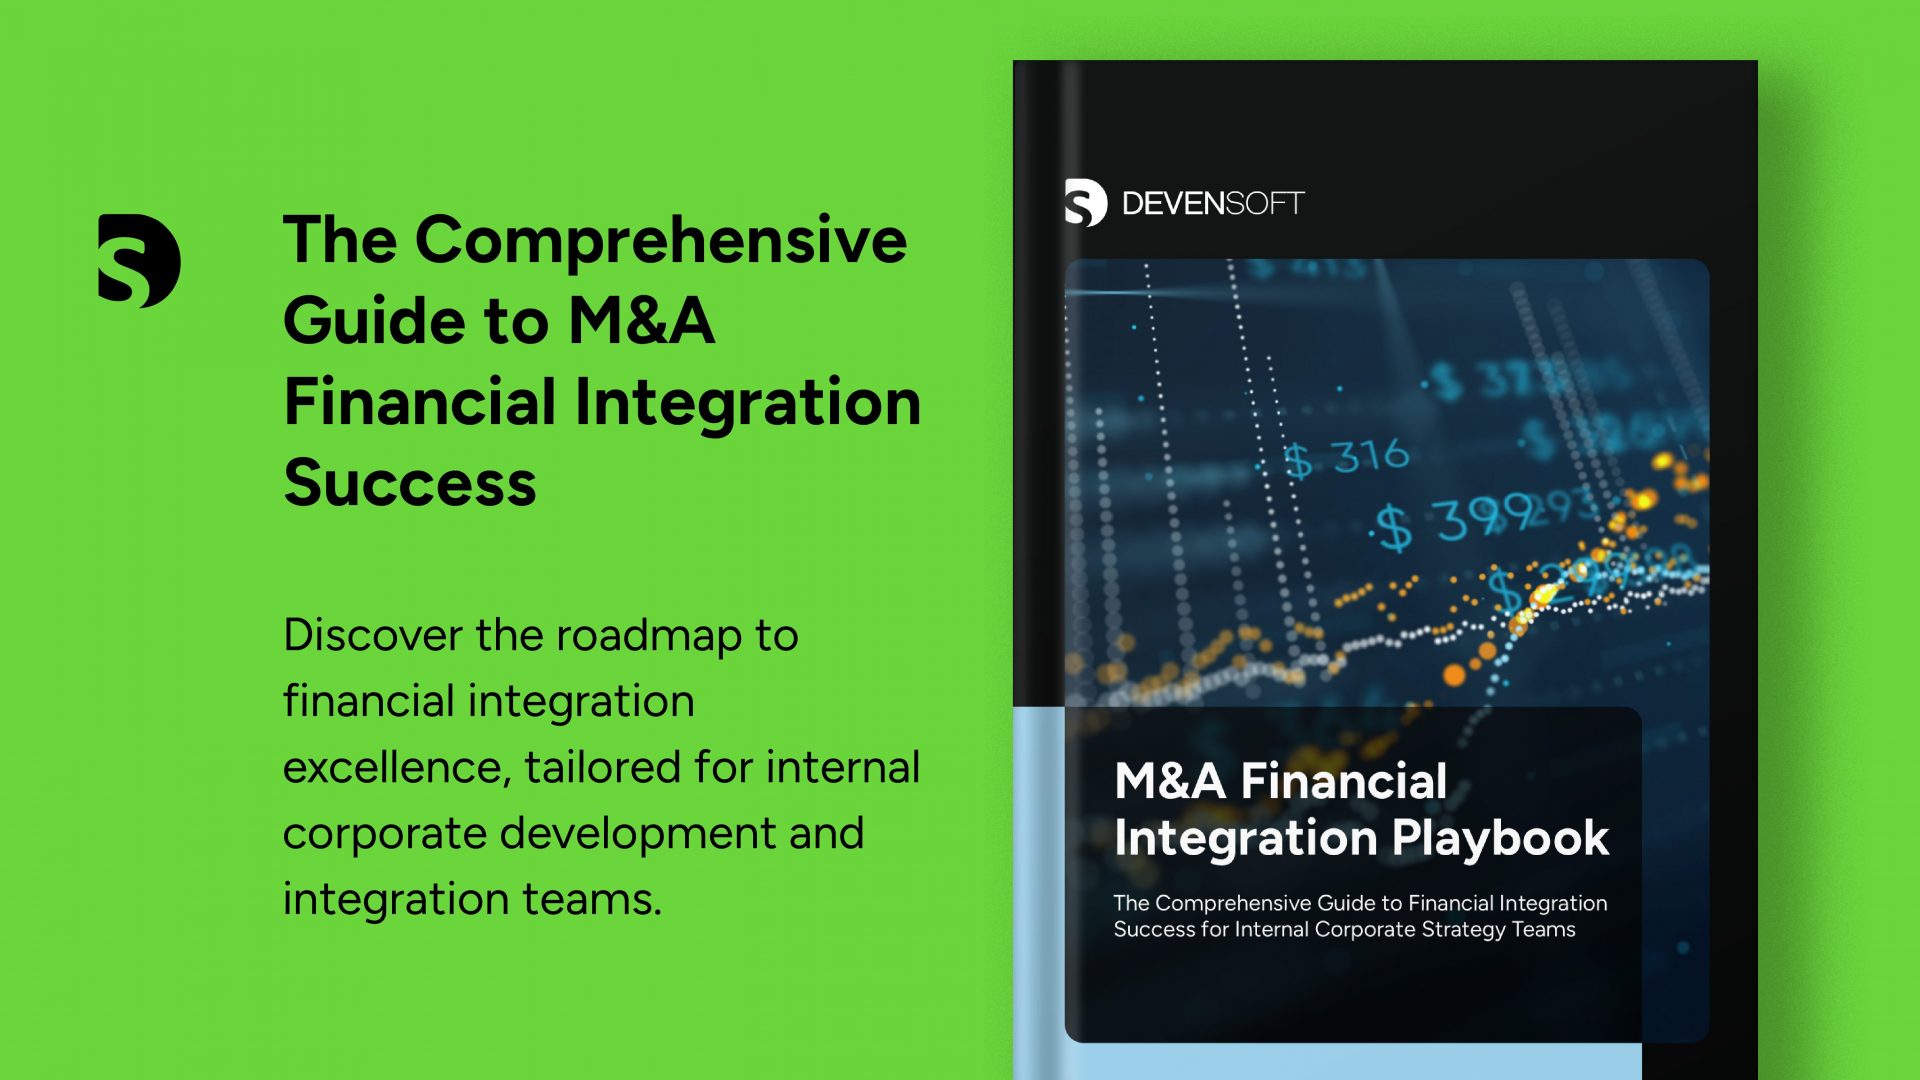 M&A Financial Integration Playbook